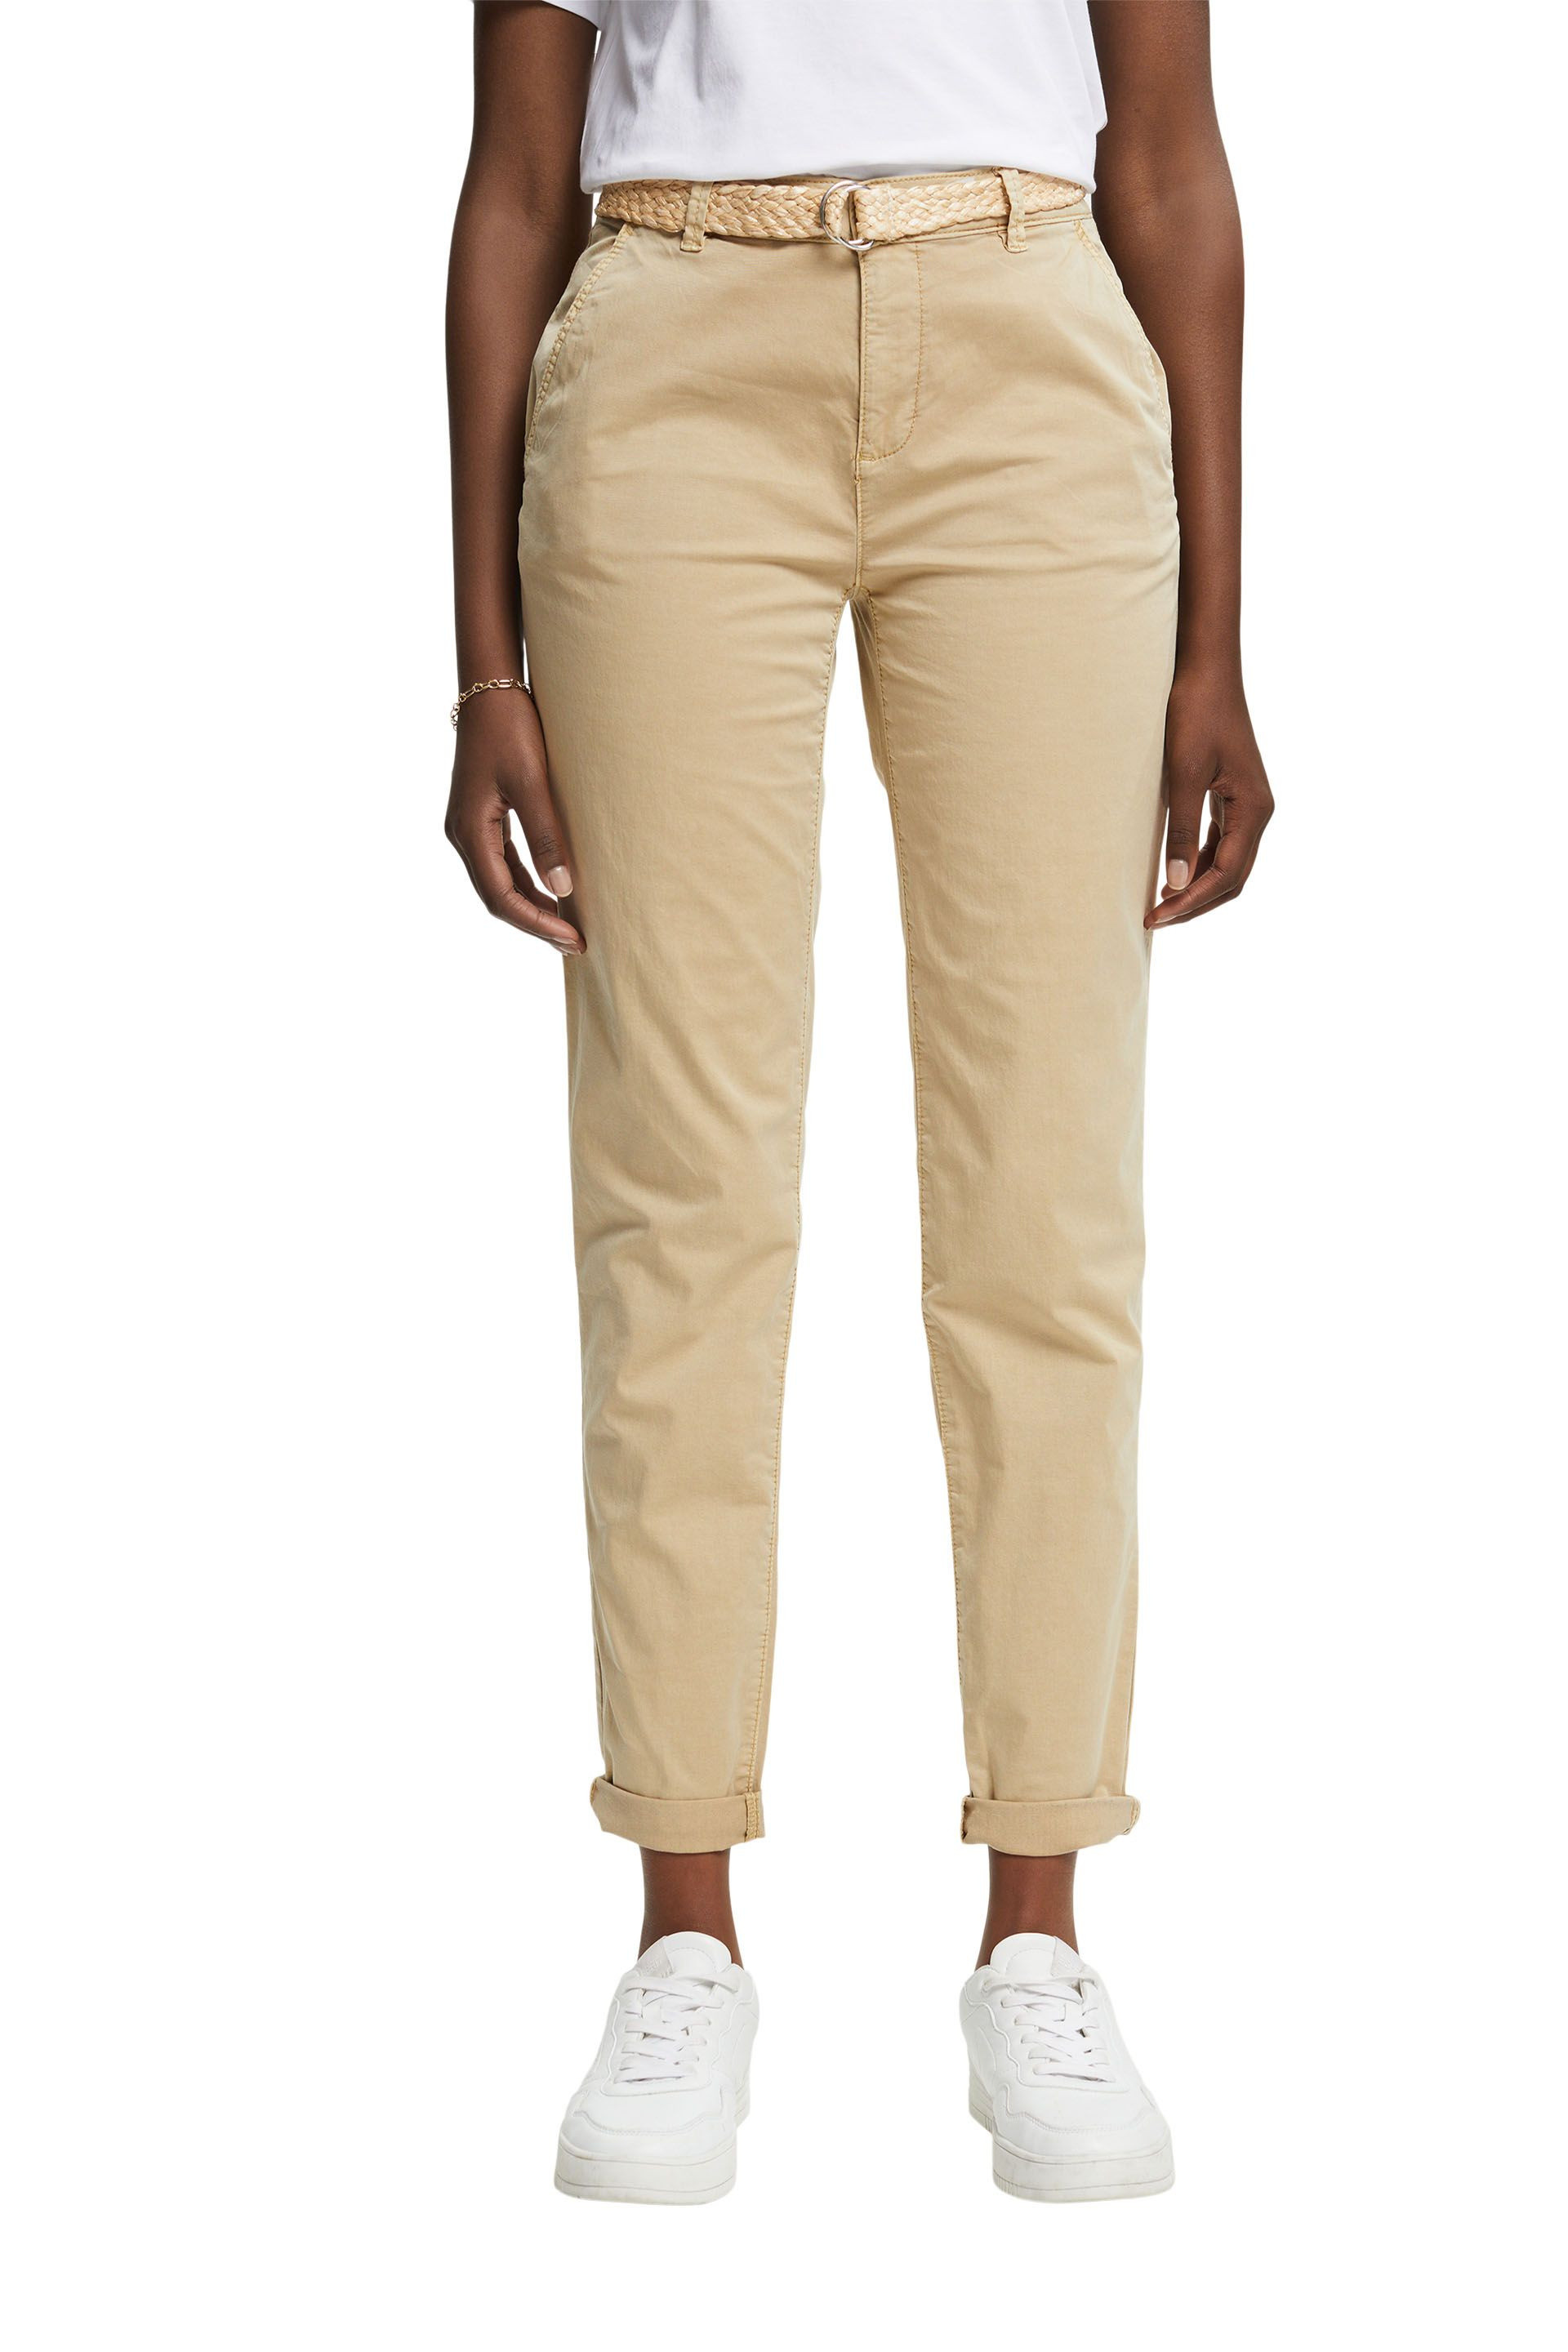 Esprit - Pantaloni chino cropped con cintura, Sabbia, large image number 1